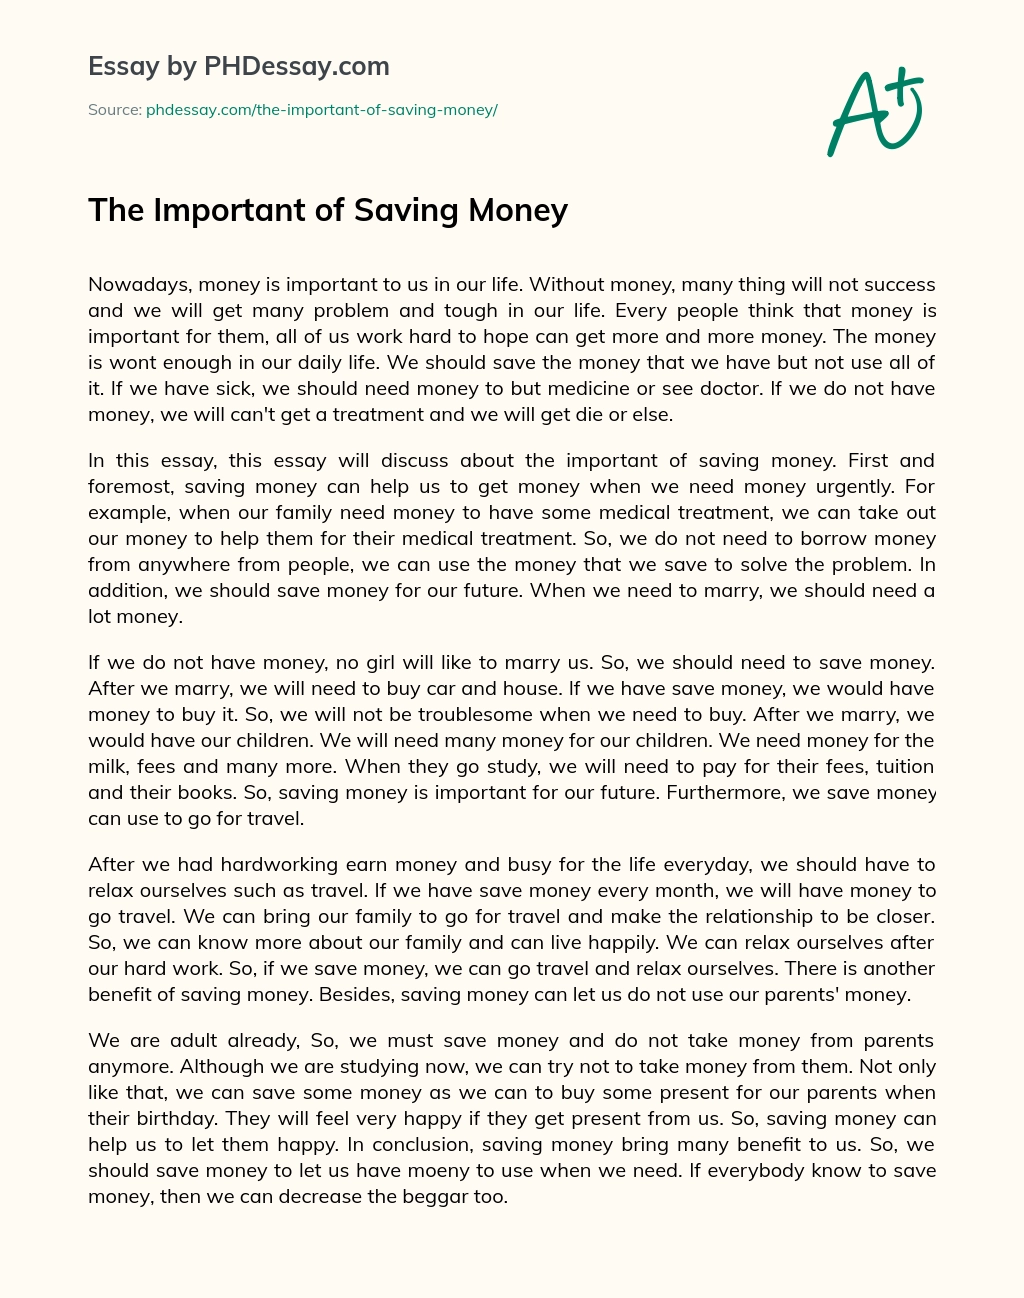 The Important of Saving Money essay